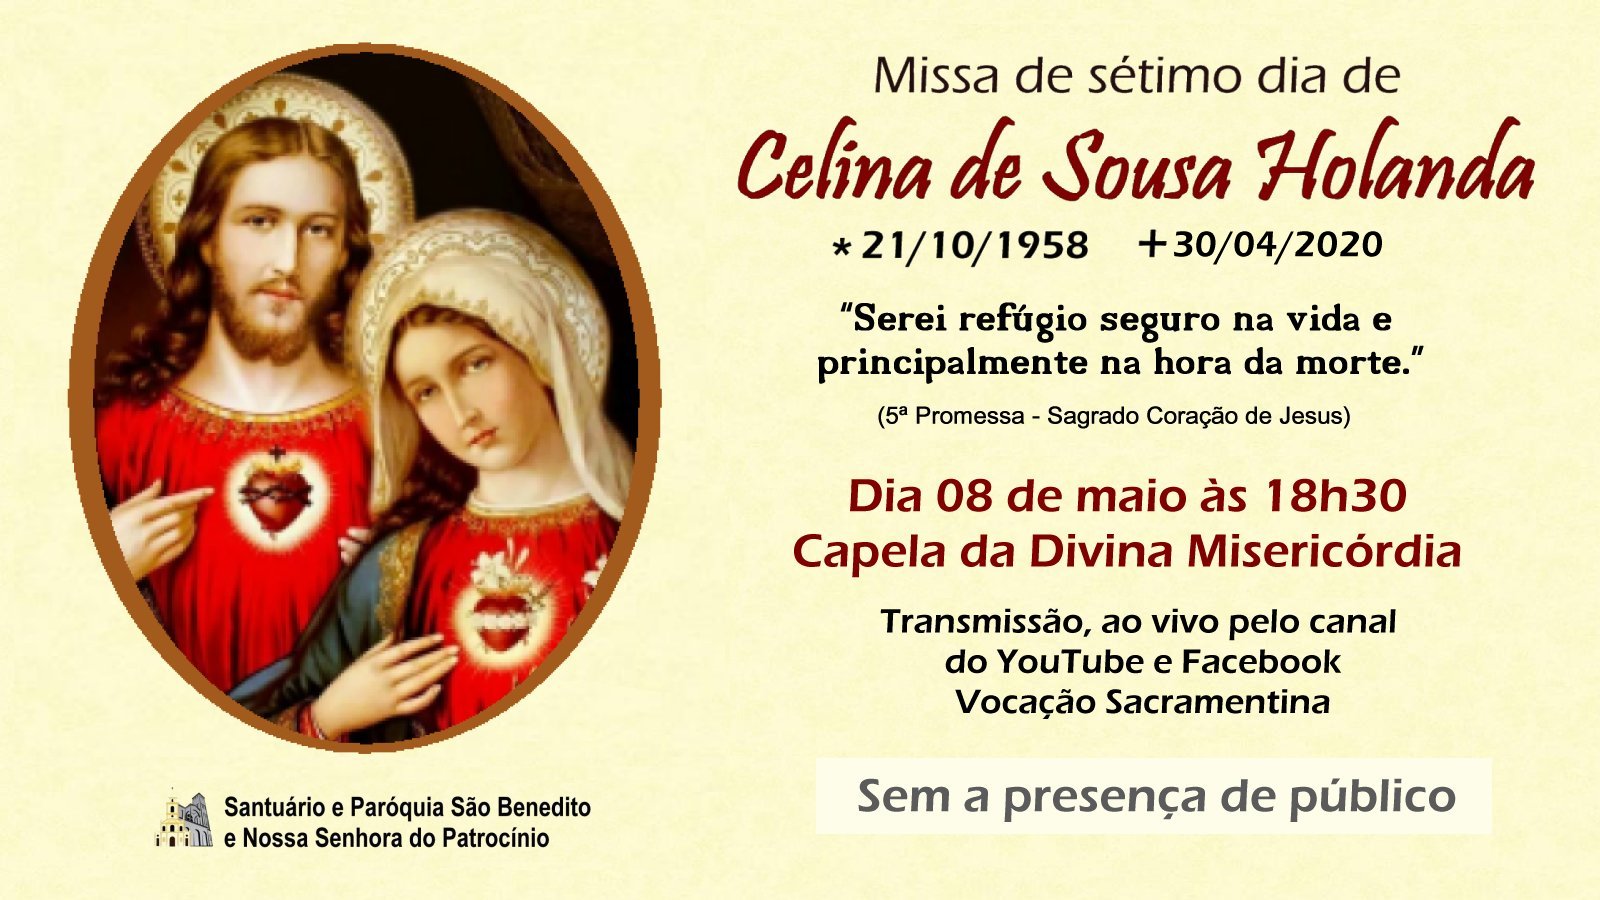 Missa de 7º dia de Celina de Souza Holanda, será transmitida nesta sexta-feira, 08/05